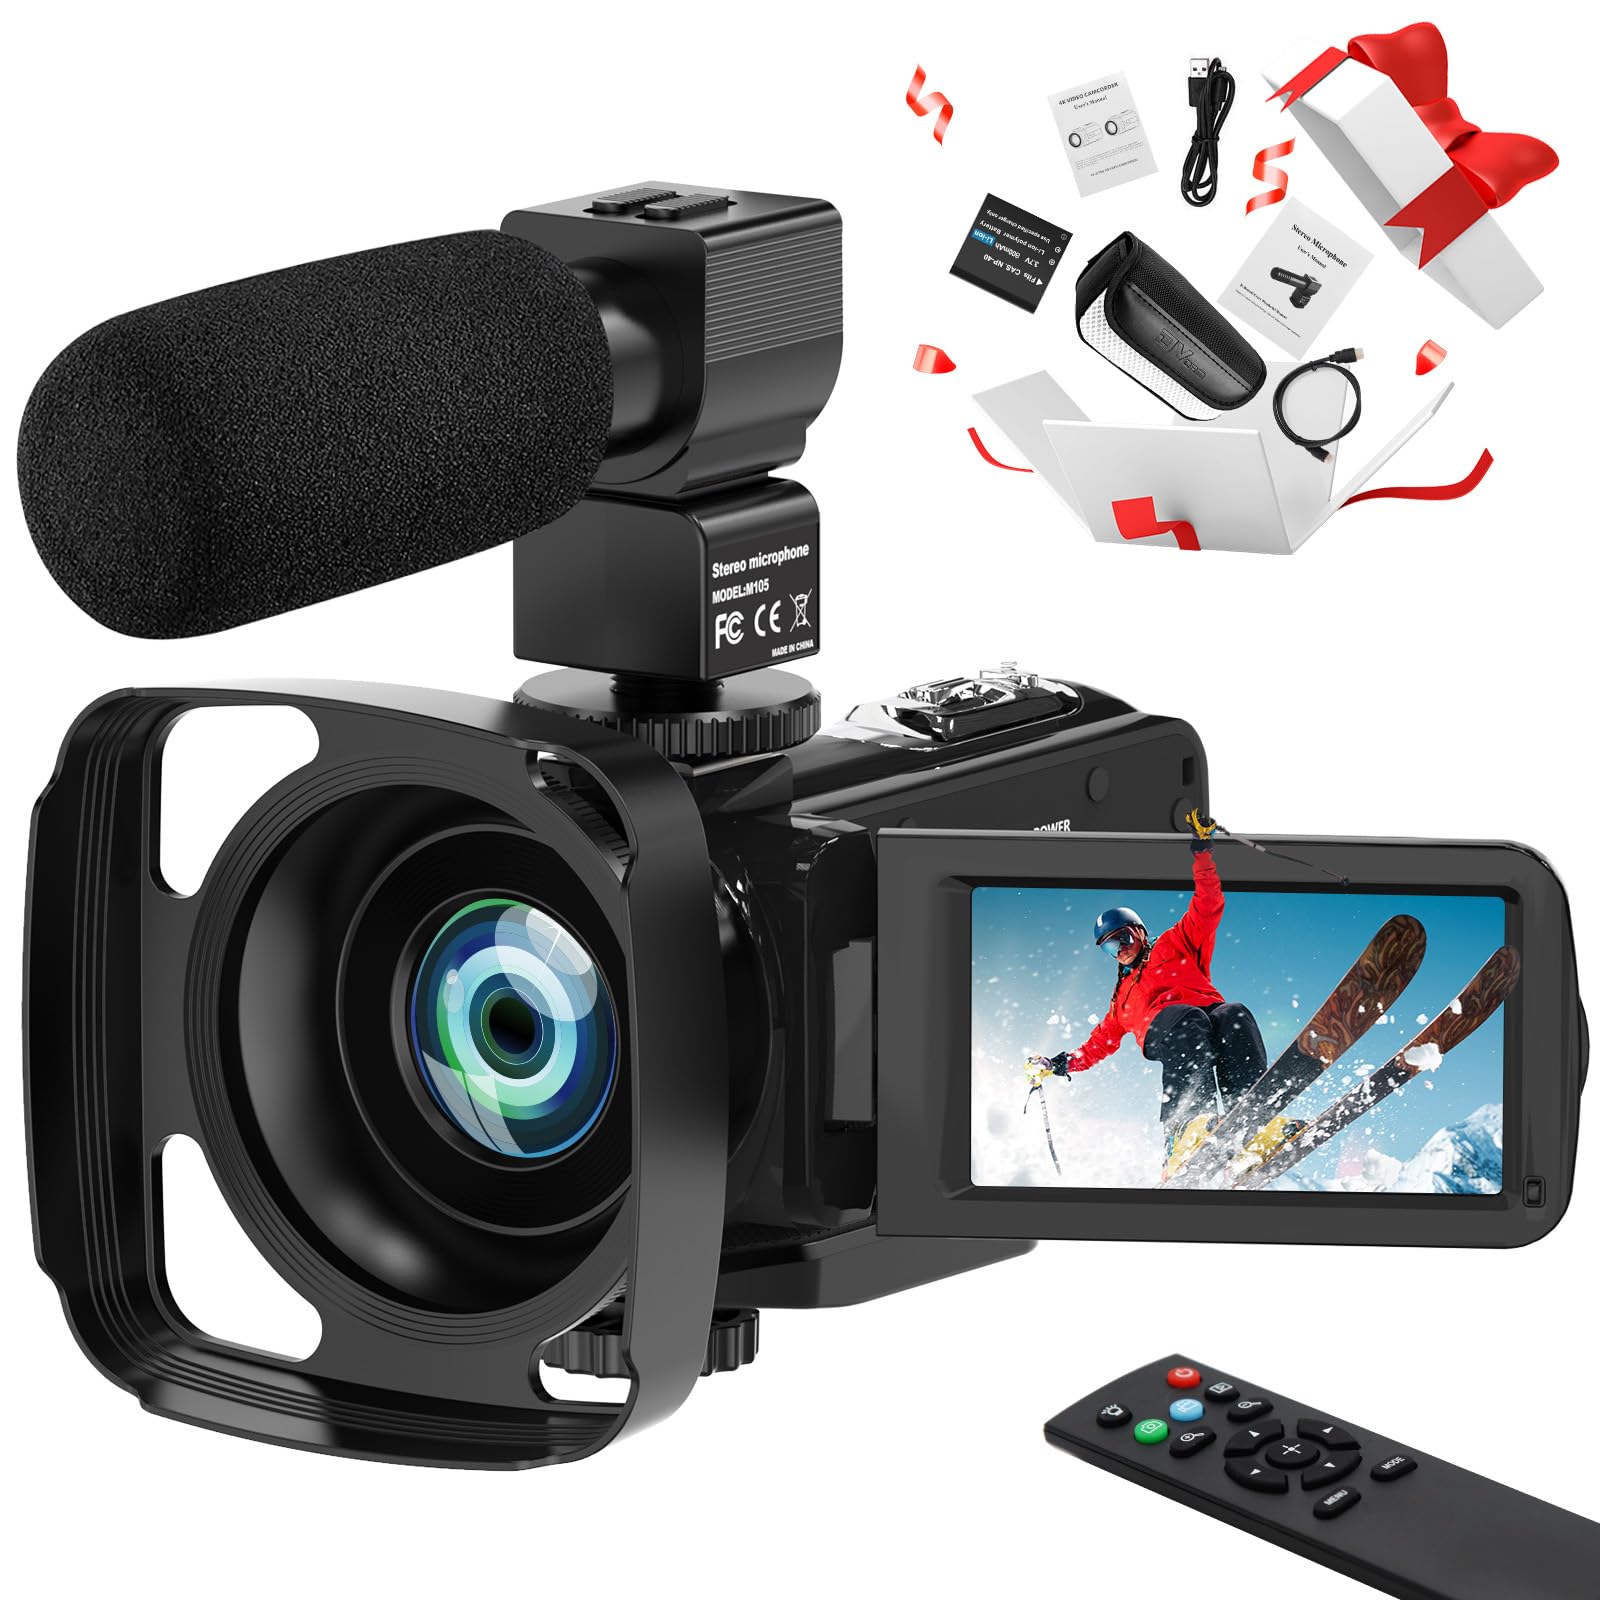 Aufoya Video Camera Camcorder, 3.0